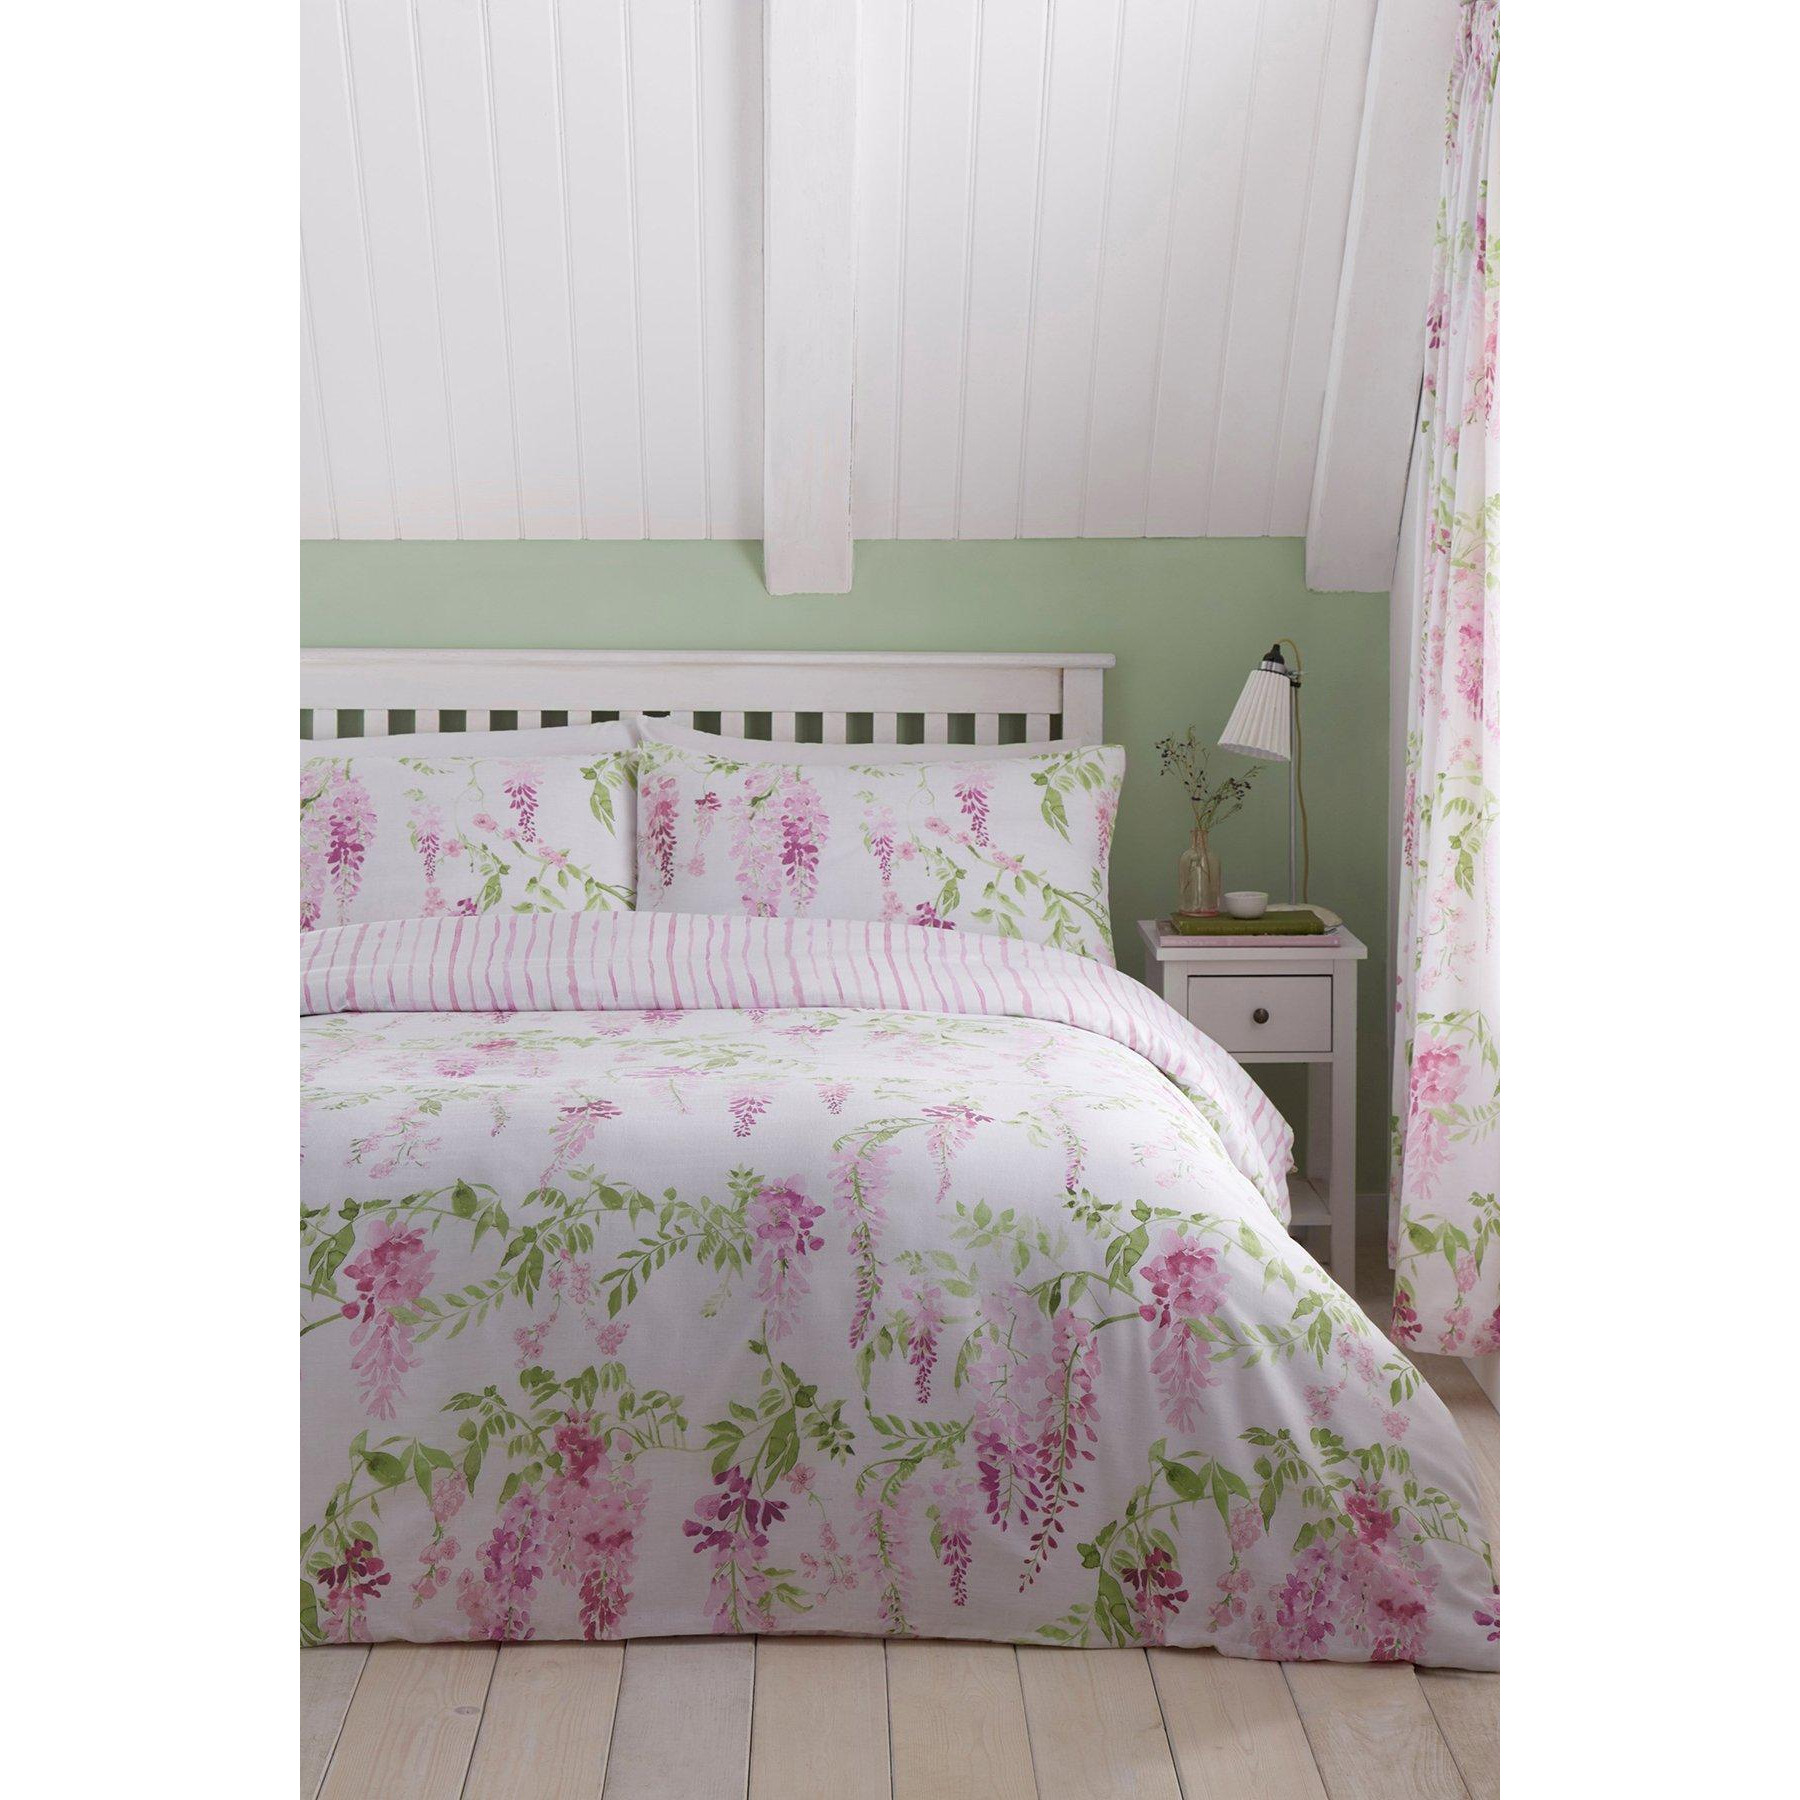 'Wisteria' Reversible Floral Bedspread - image 1